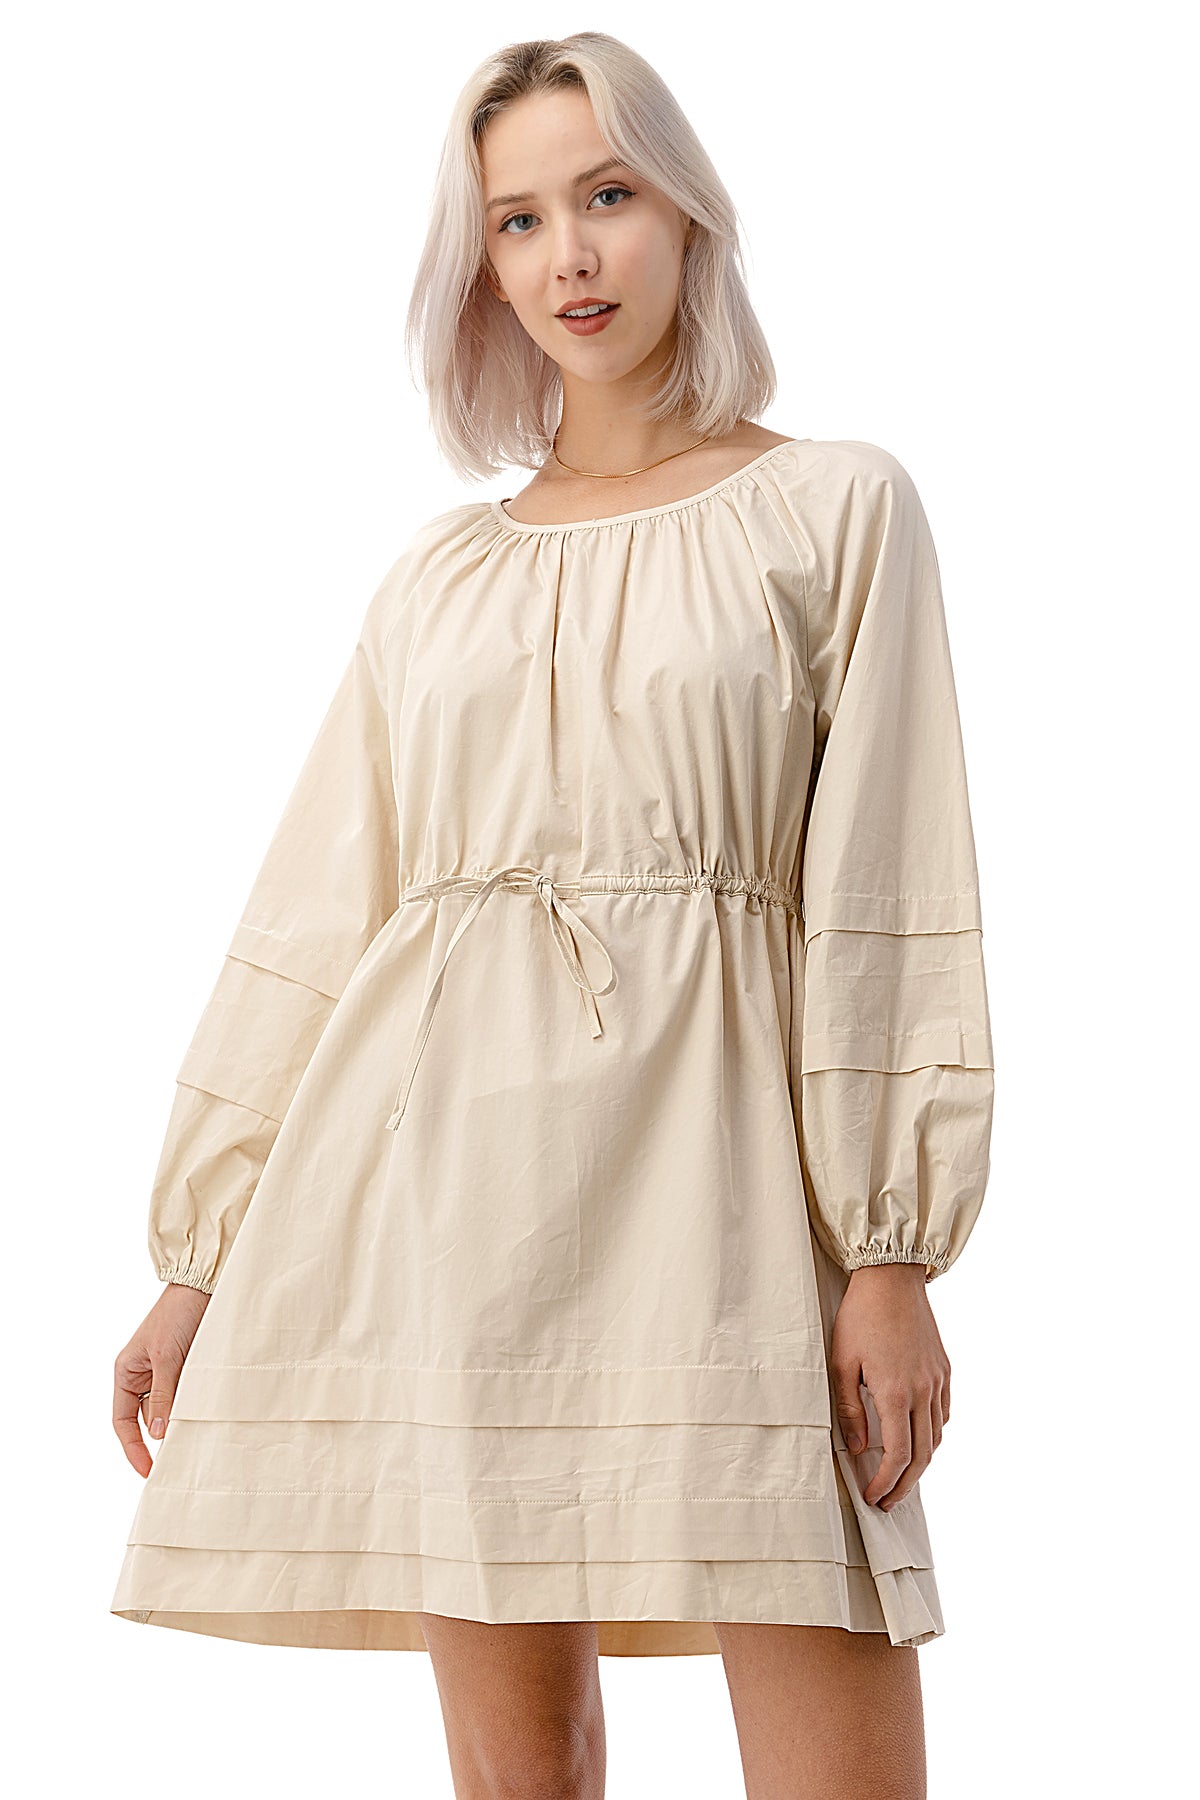 EDGY Land Girl's and Women's Round Neck Long Sleeve Tunneled Drawstring Trendy Mini Dress